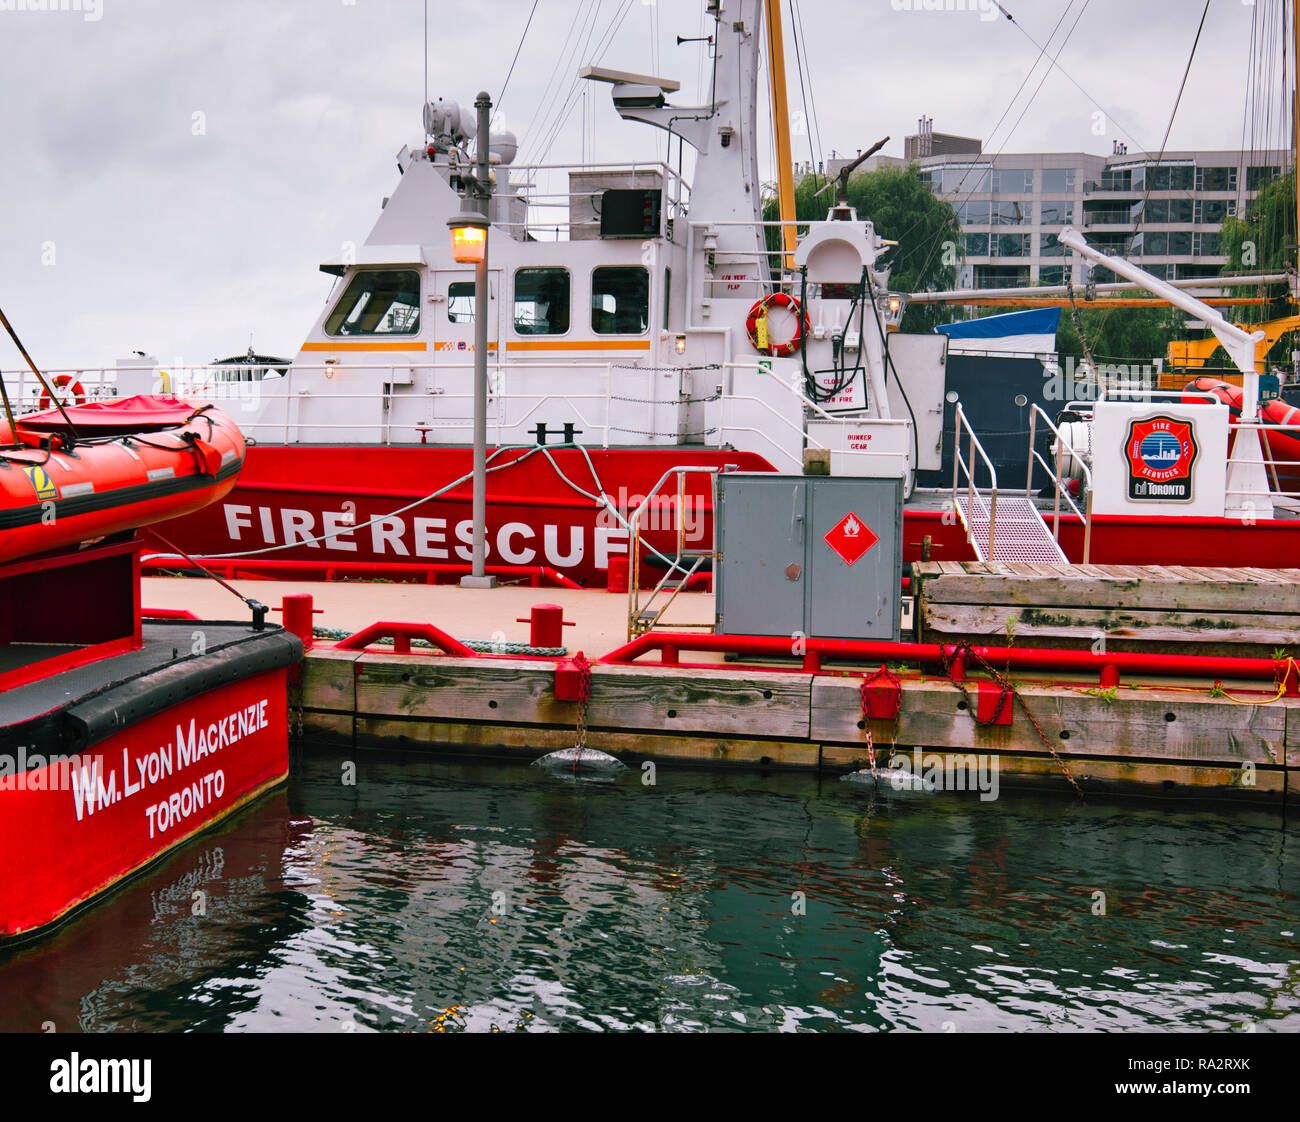 Fire boats of the Toronto fire service including the William Lyon Mackenzie, Toronto, Ontario, Canada Stock Photo